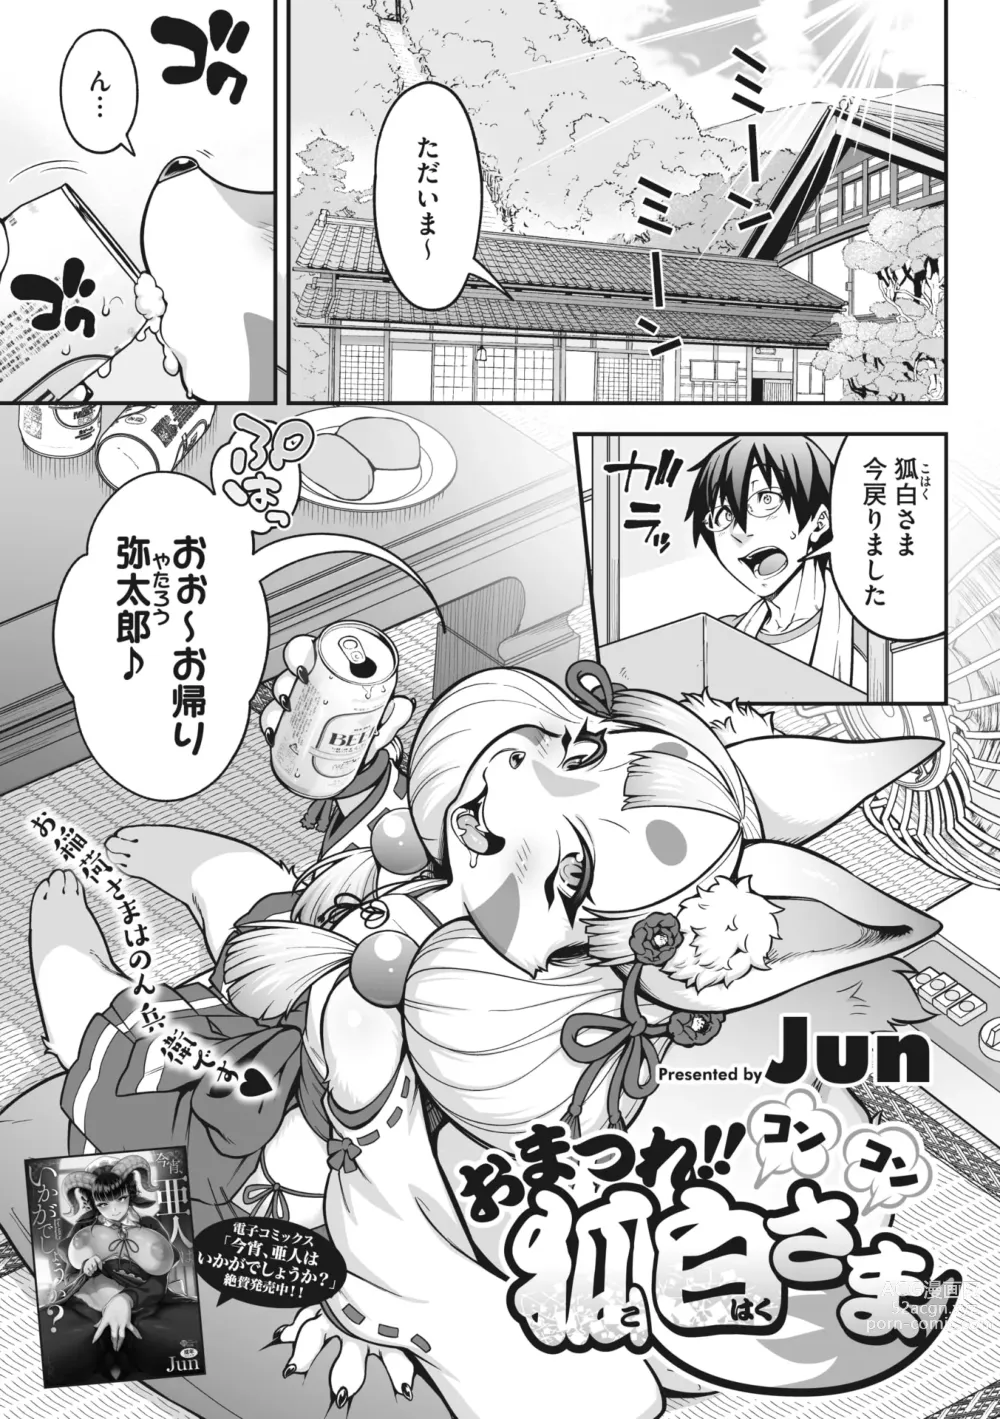 Page 3 of manga COMIC GAIRA Vol. 15